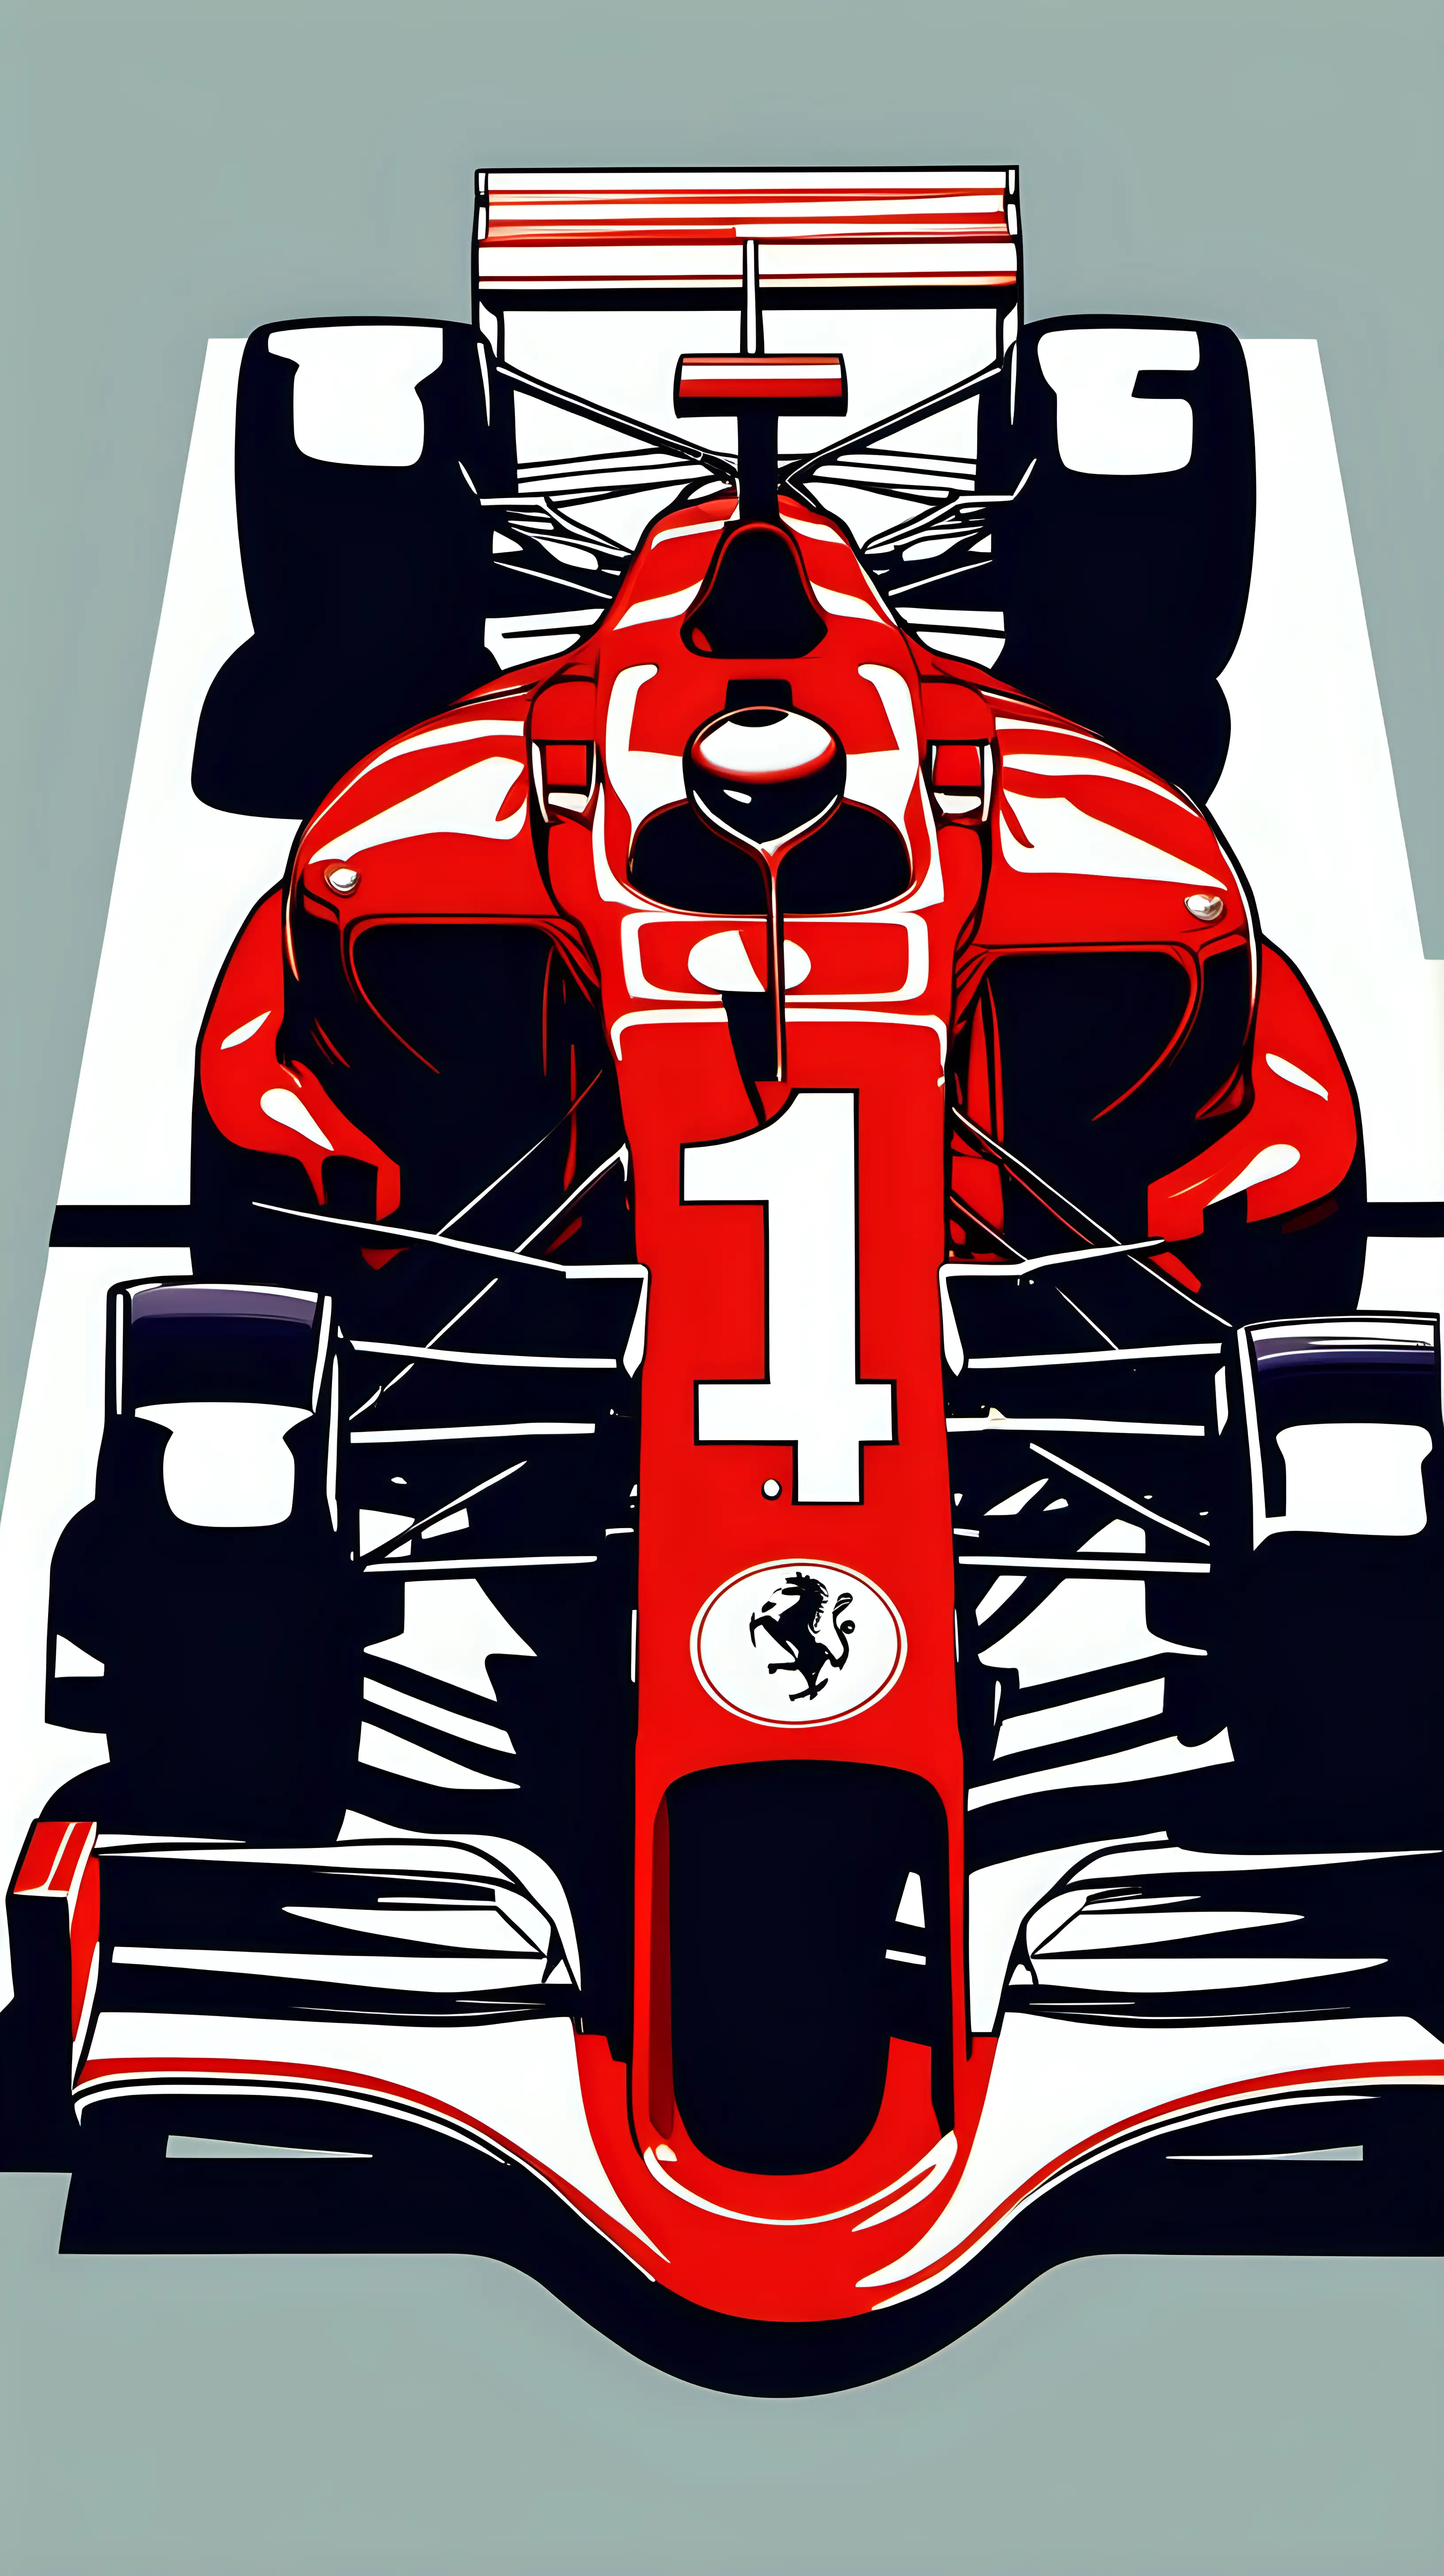 Formula 1 racing car on racing track, ferrari, inspired by Andy warhol pop art design 